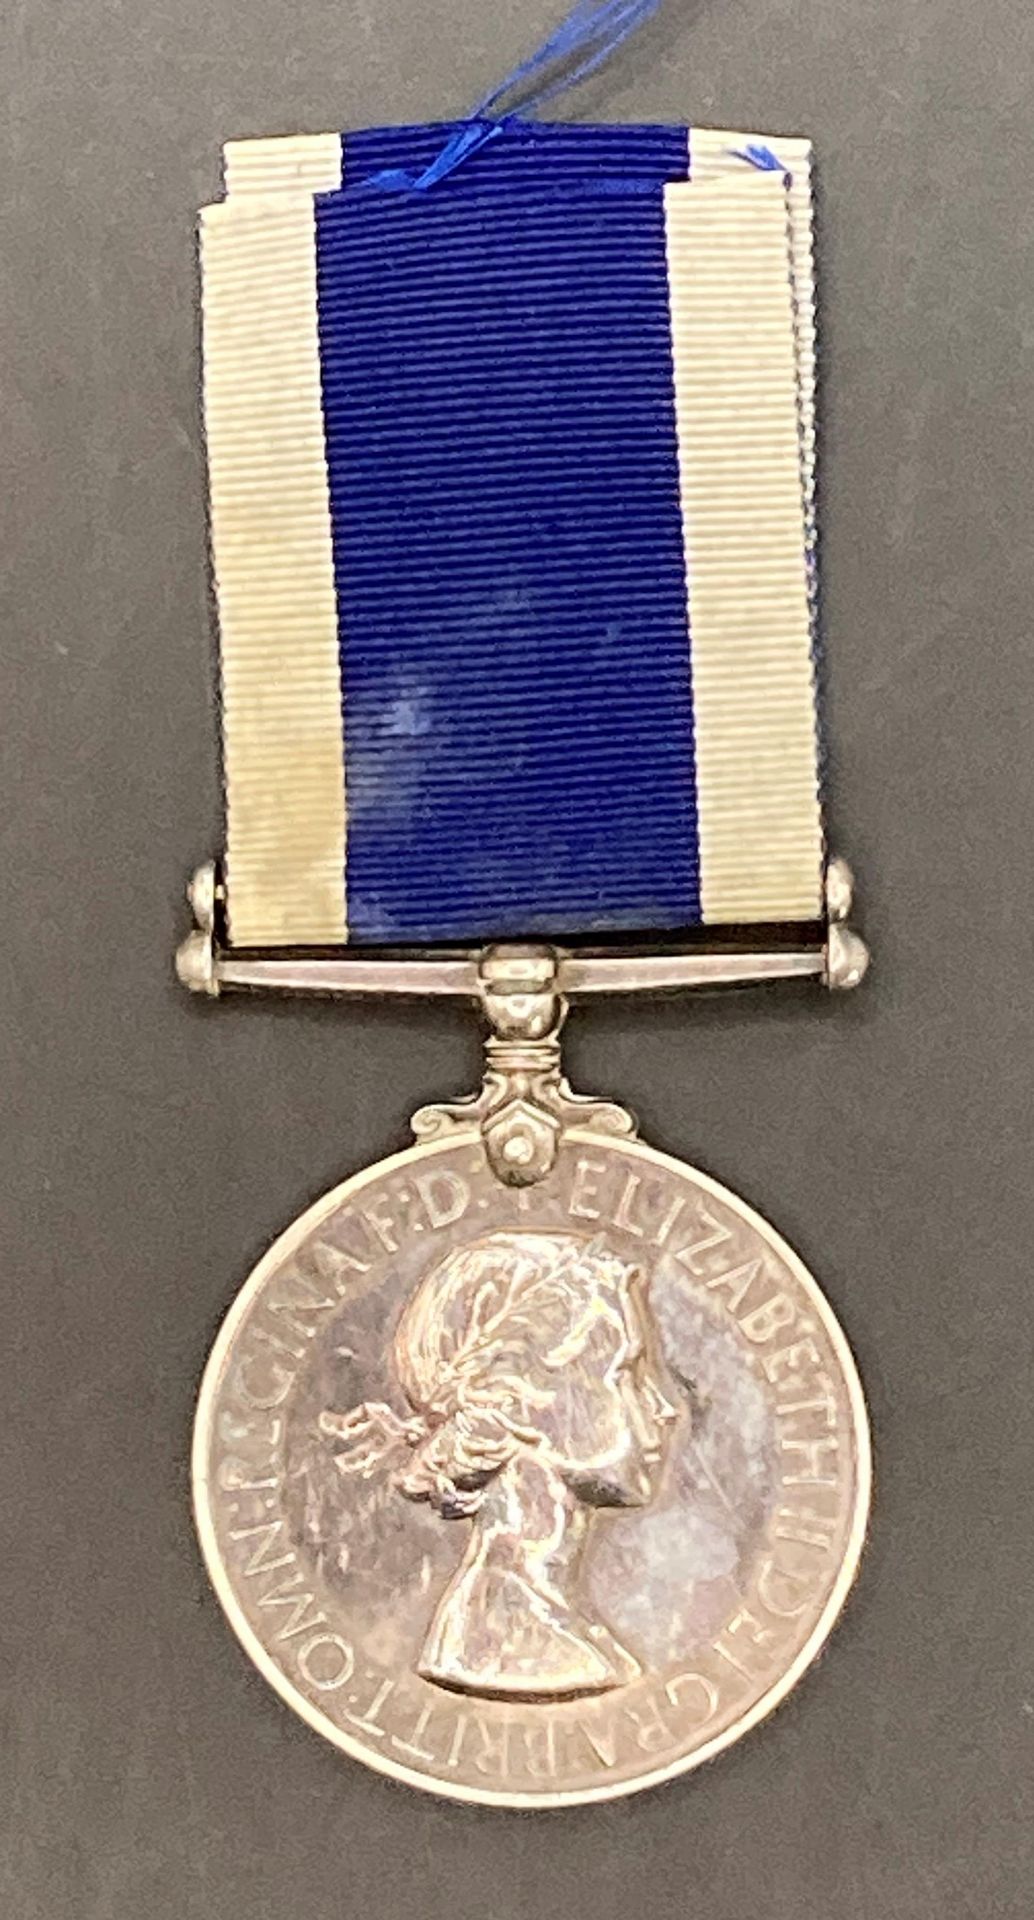 Royal Navy Long Service Medal and ribbon Queen Elizabeth II to MX 755298 BC Moore LPM HMS Pembroke